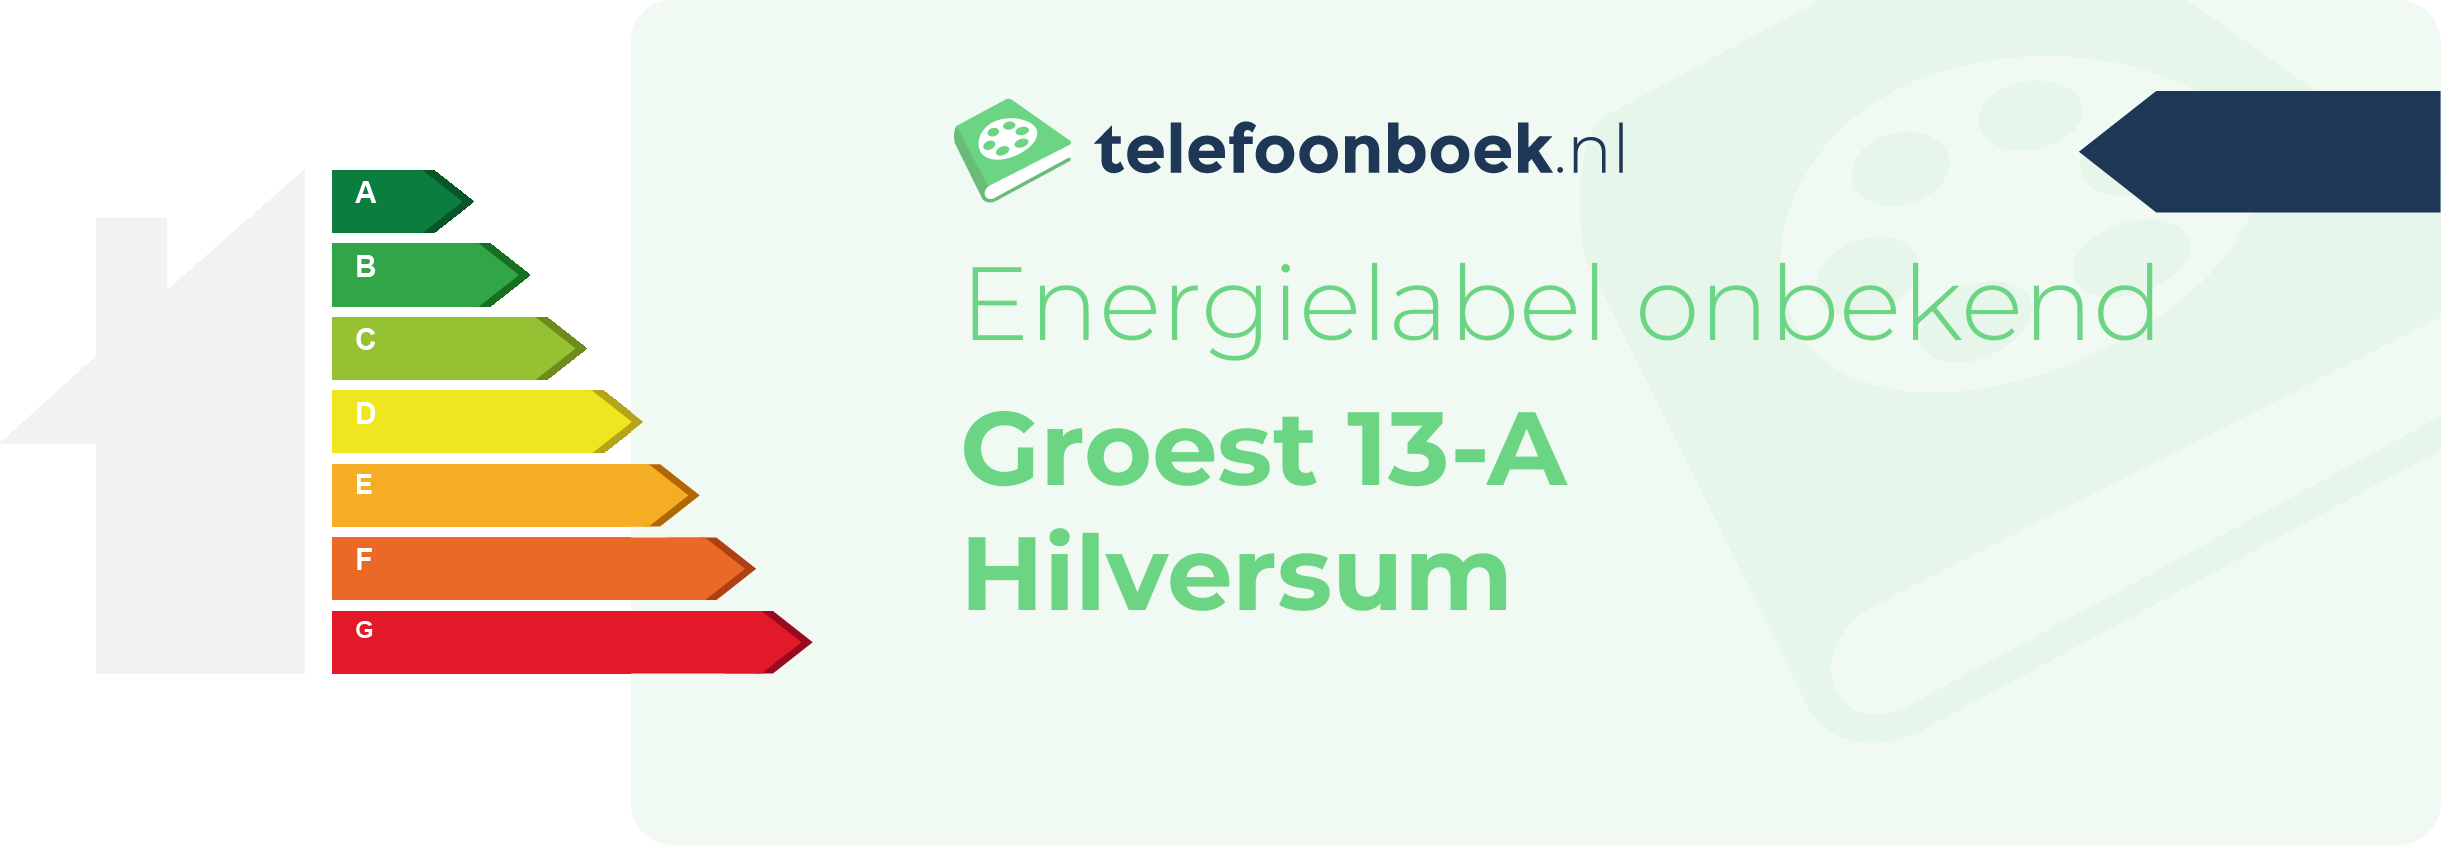 Energielabel Groest 13-A Hilversum